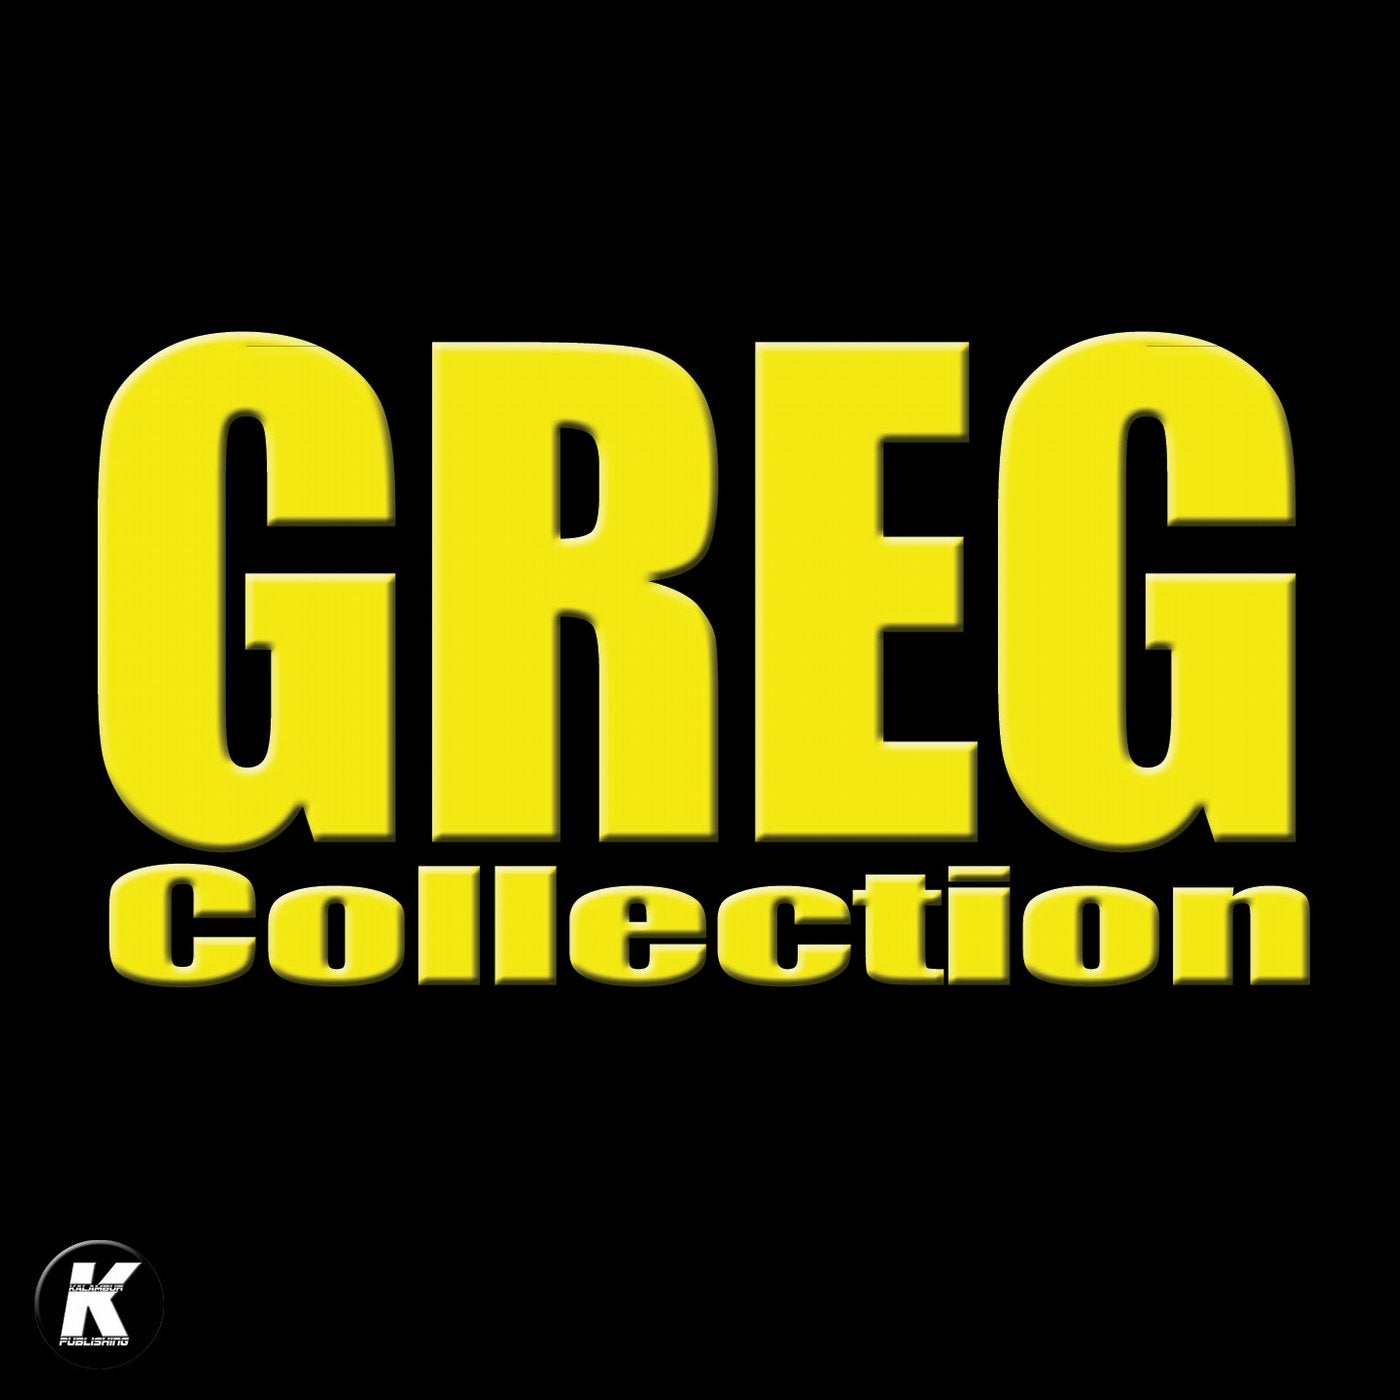 Greg Collection